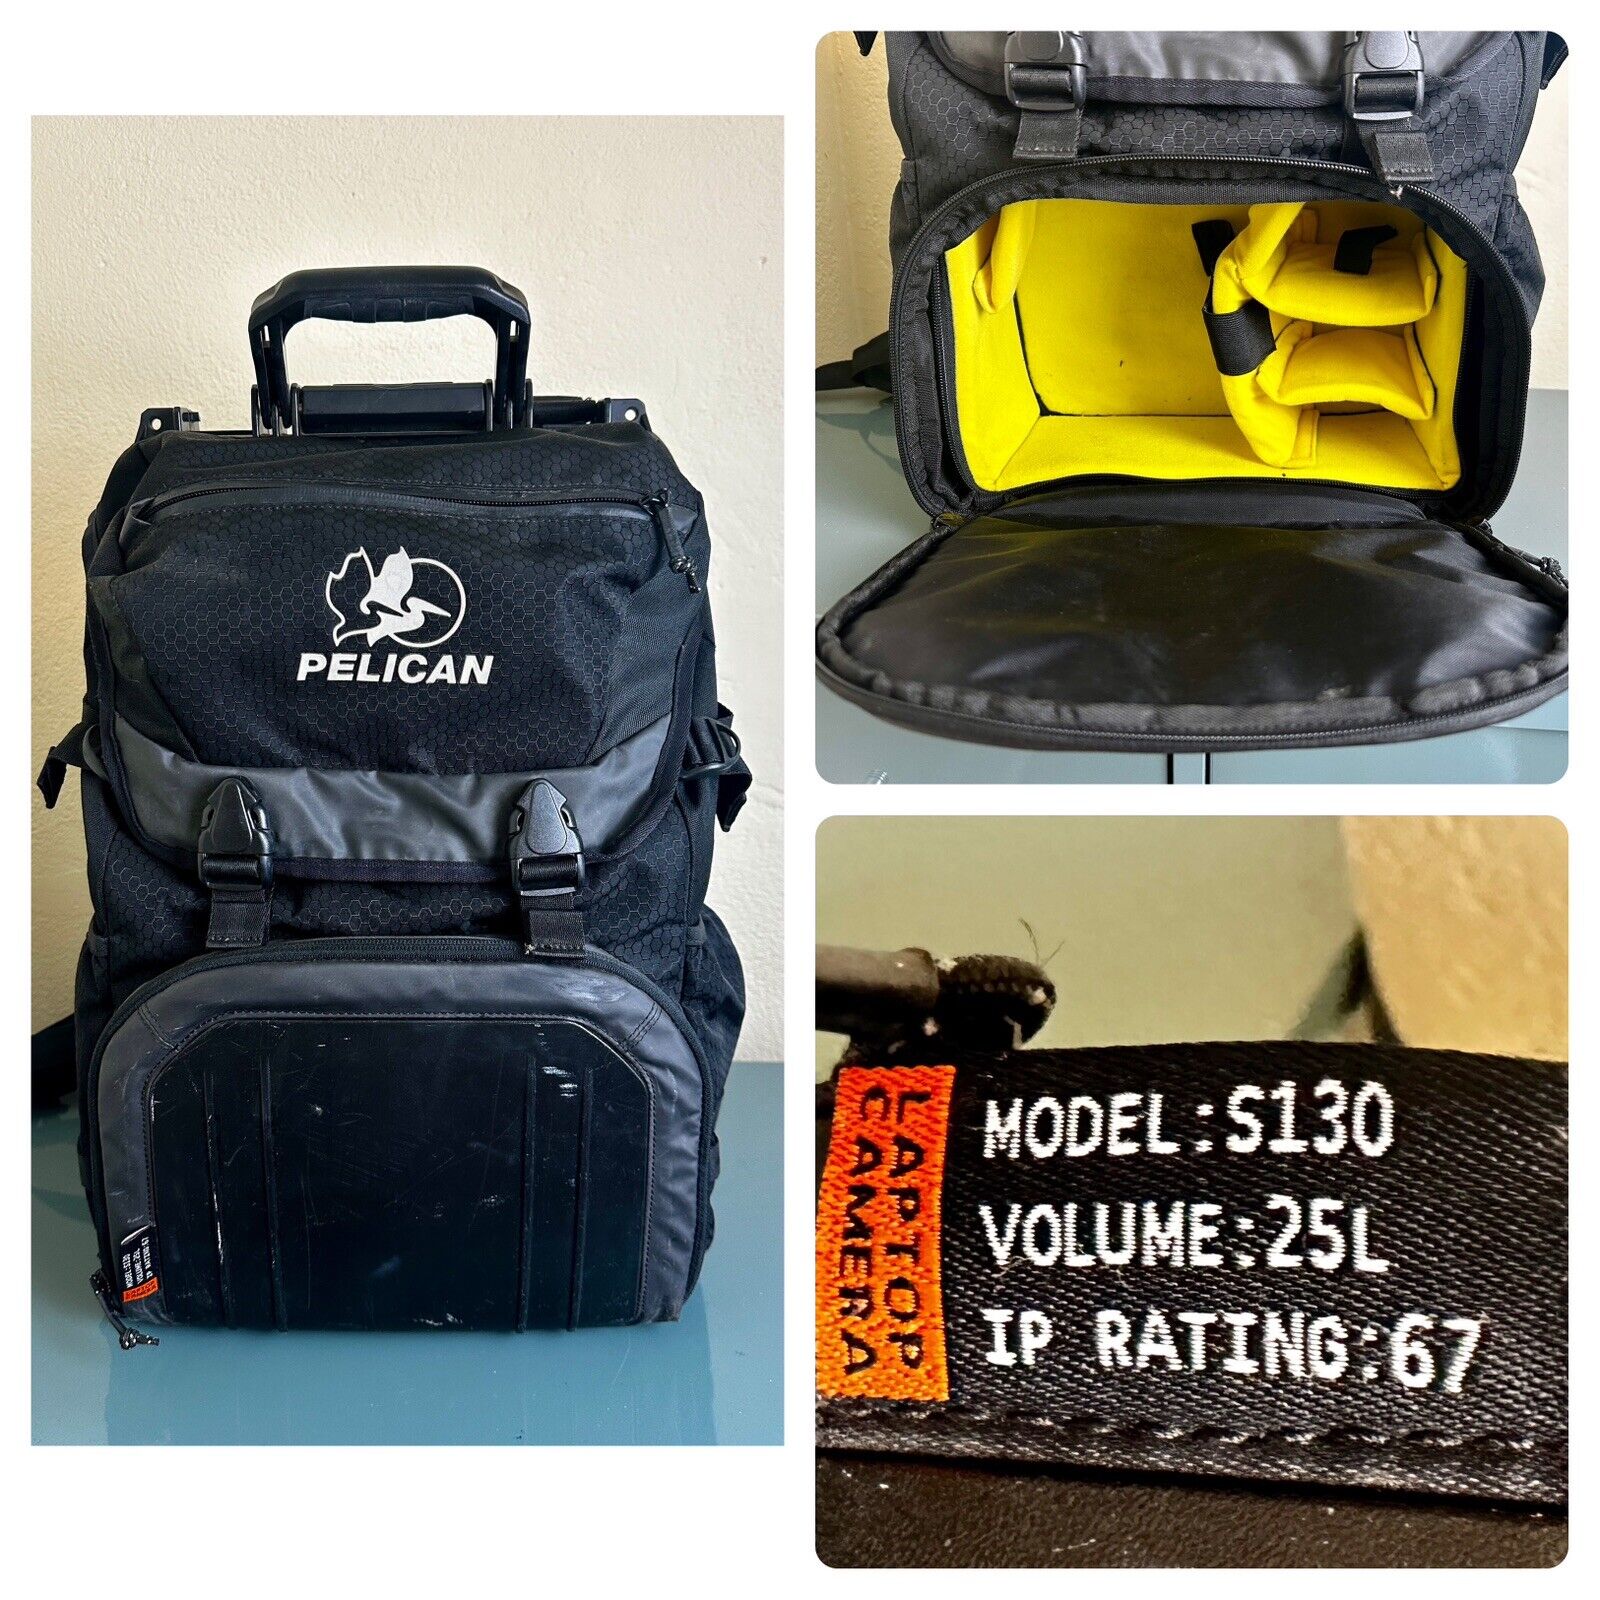 MUST READ Black Pelican Laptop Camera Padded Backpack Model S130 Volume 25L $400